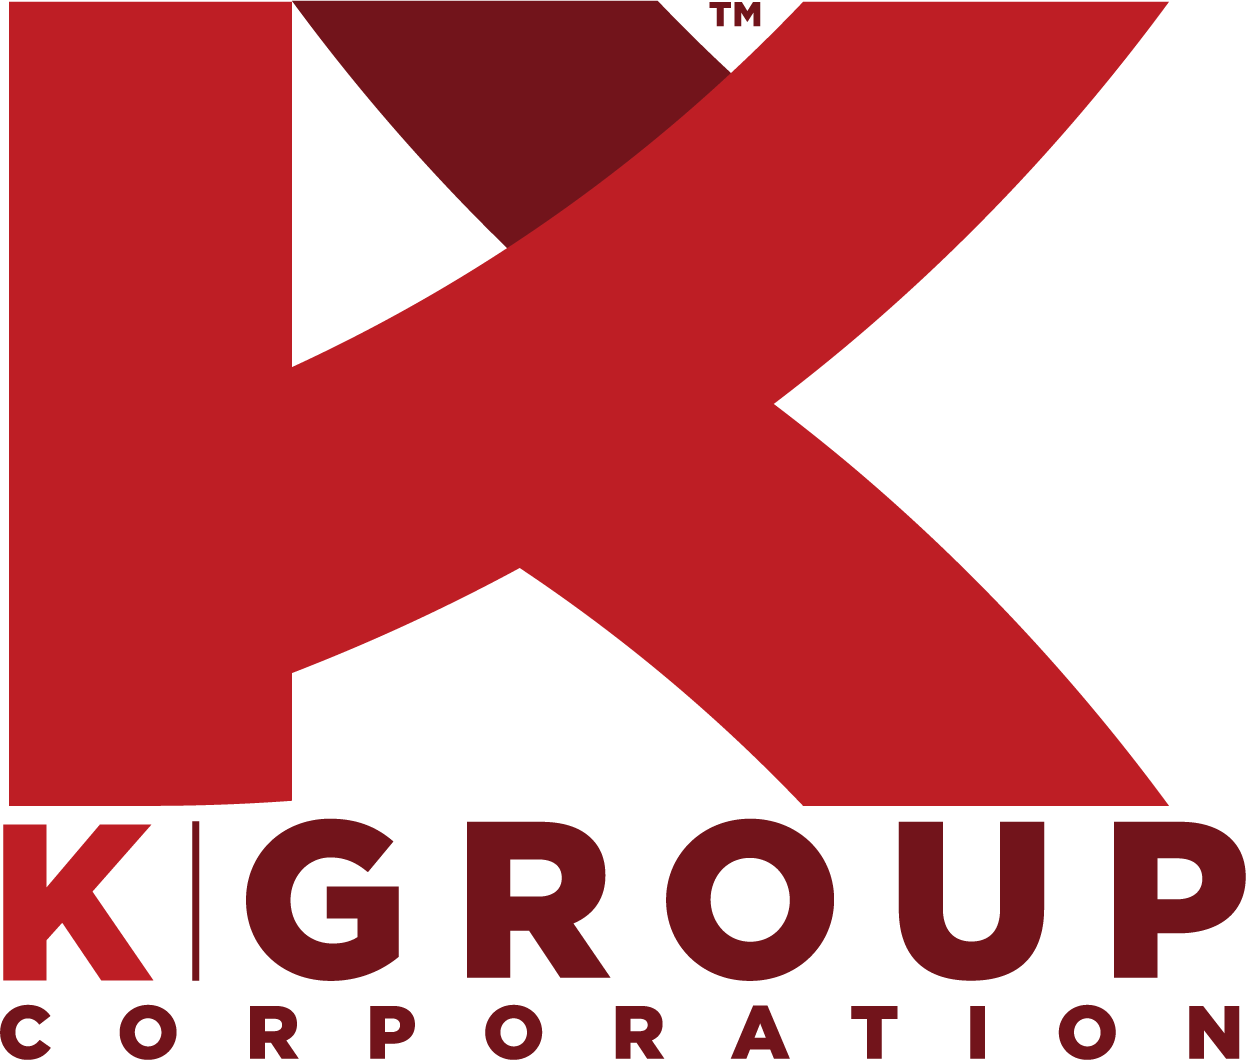 K Group